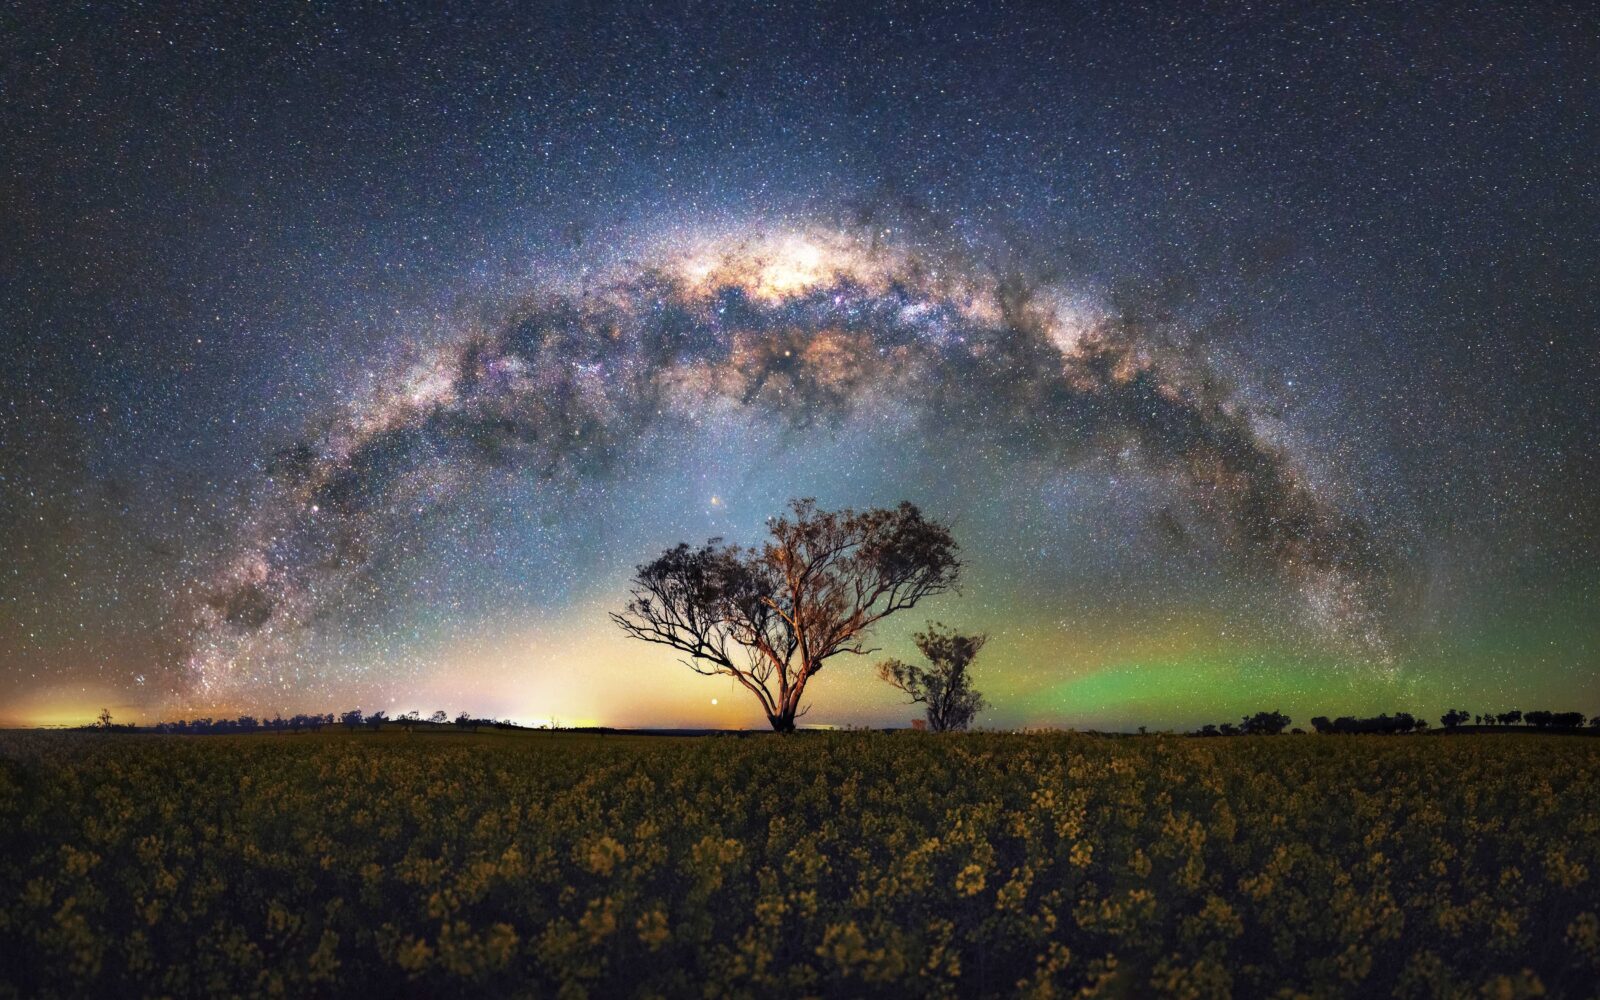 Port Macquarie Milky Way Masterclass - how to photograph the Milky Way